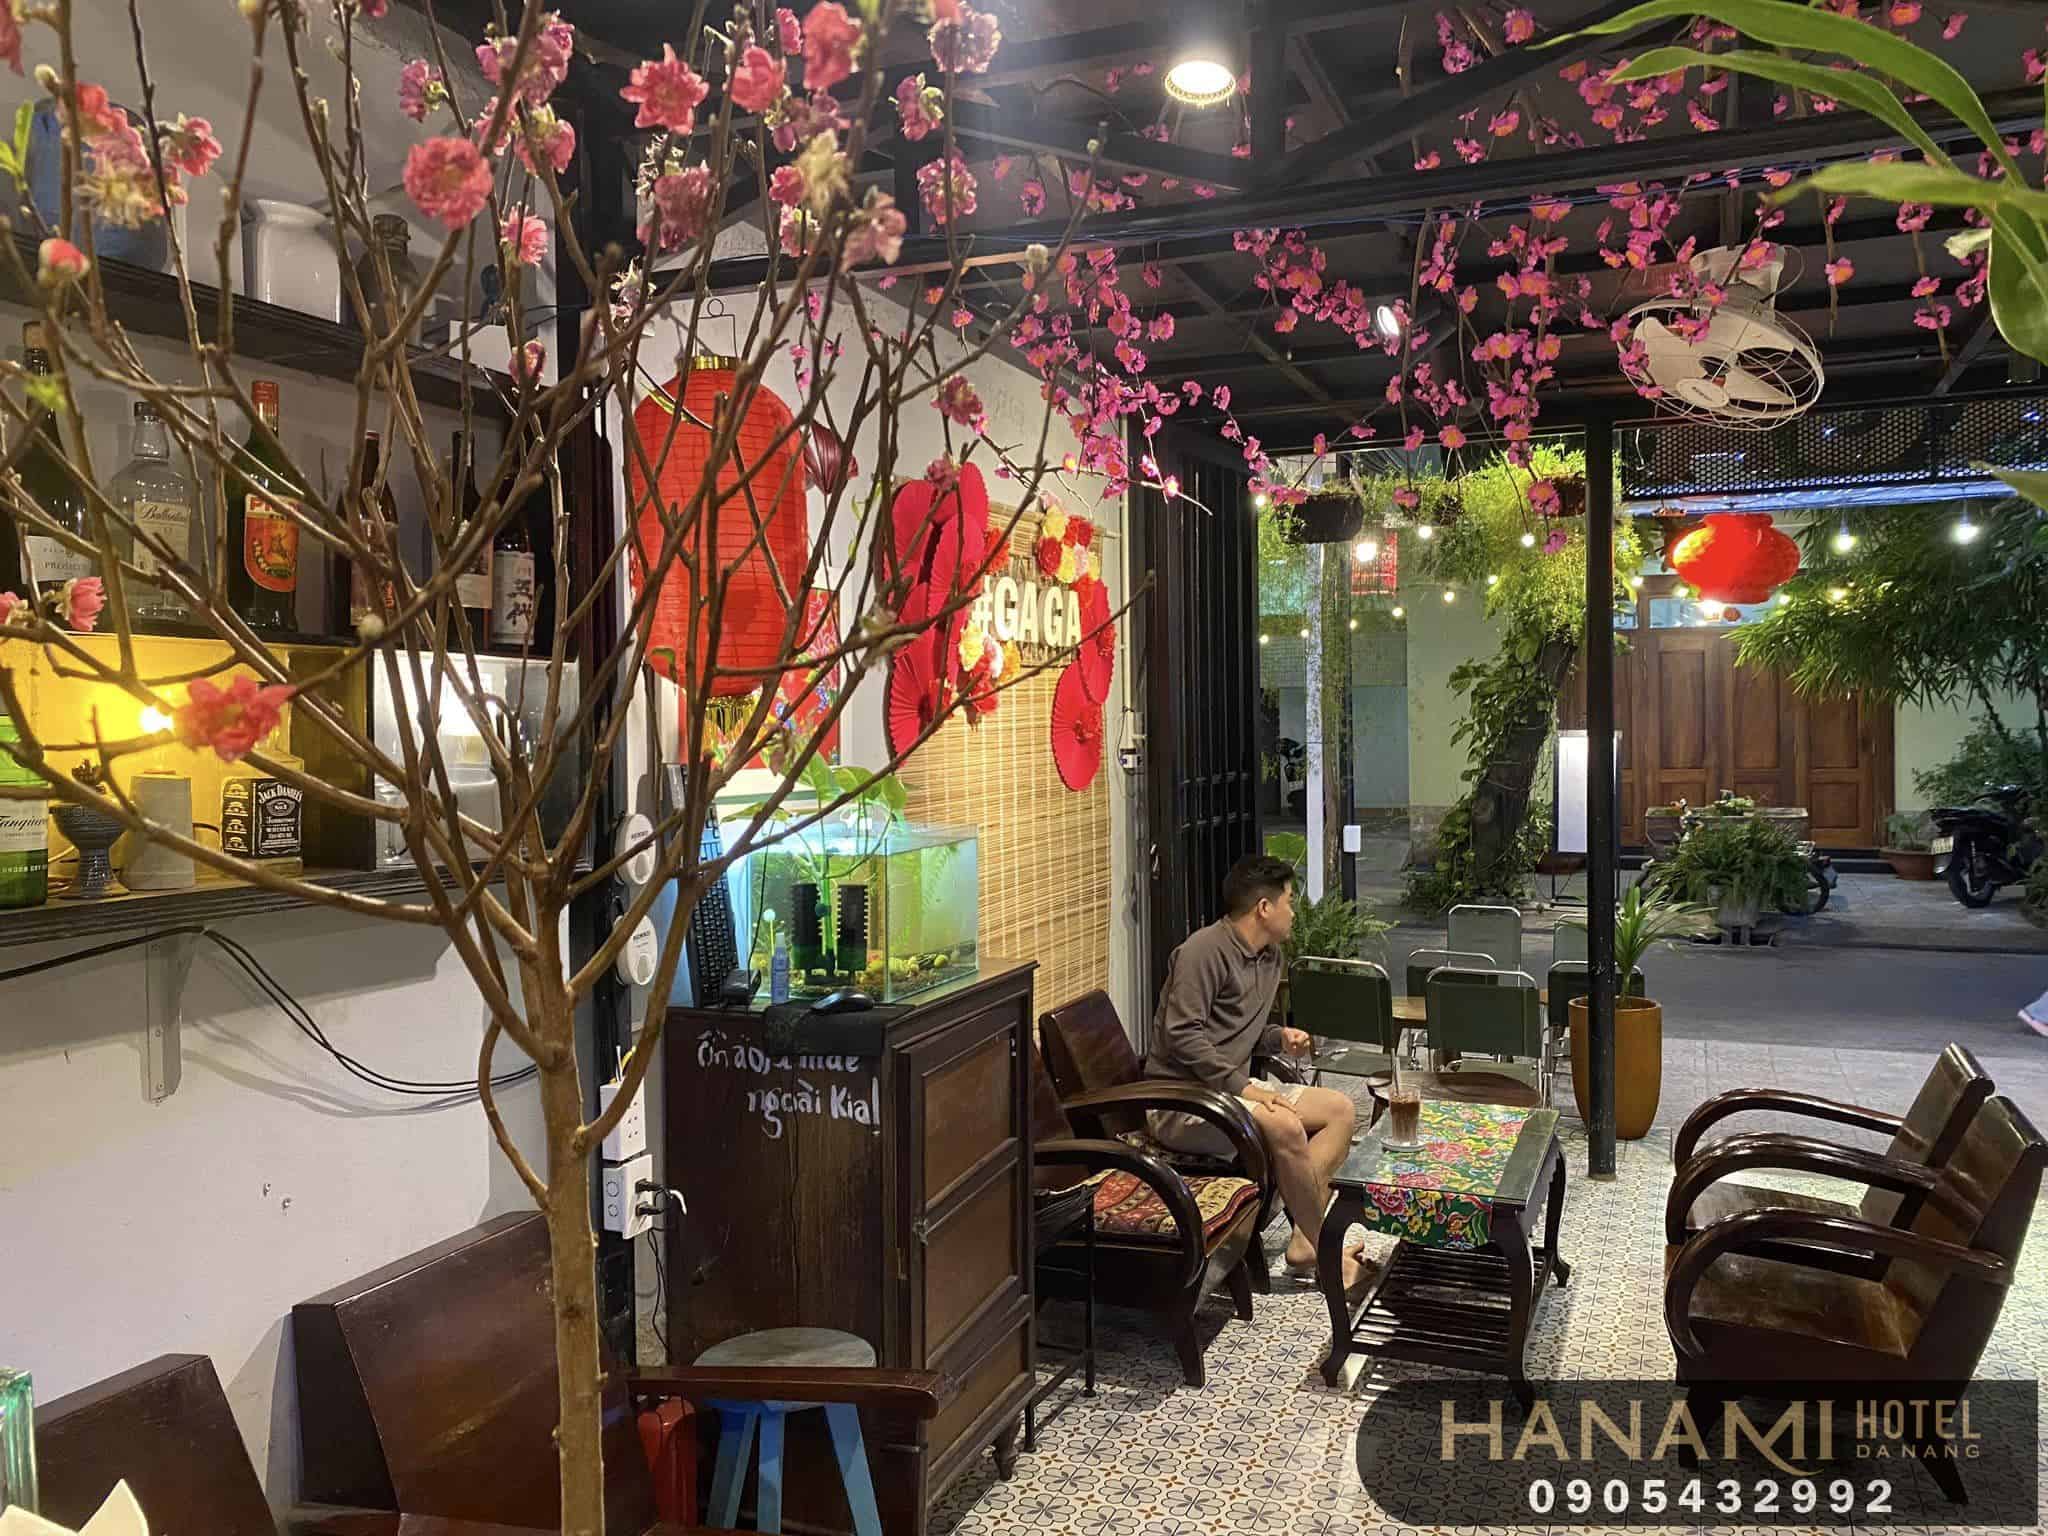 best cafe in Hoa Khanh Da Nang